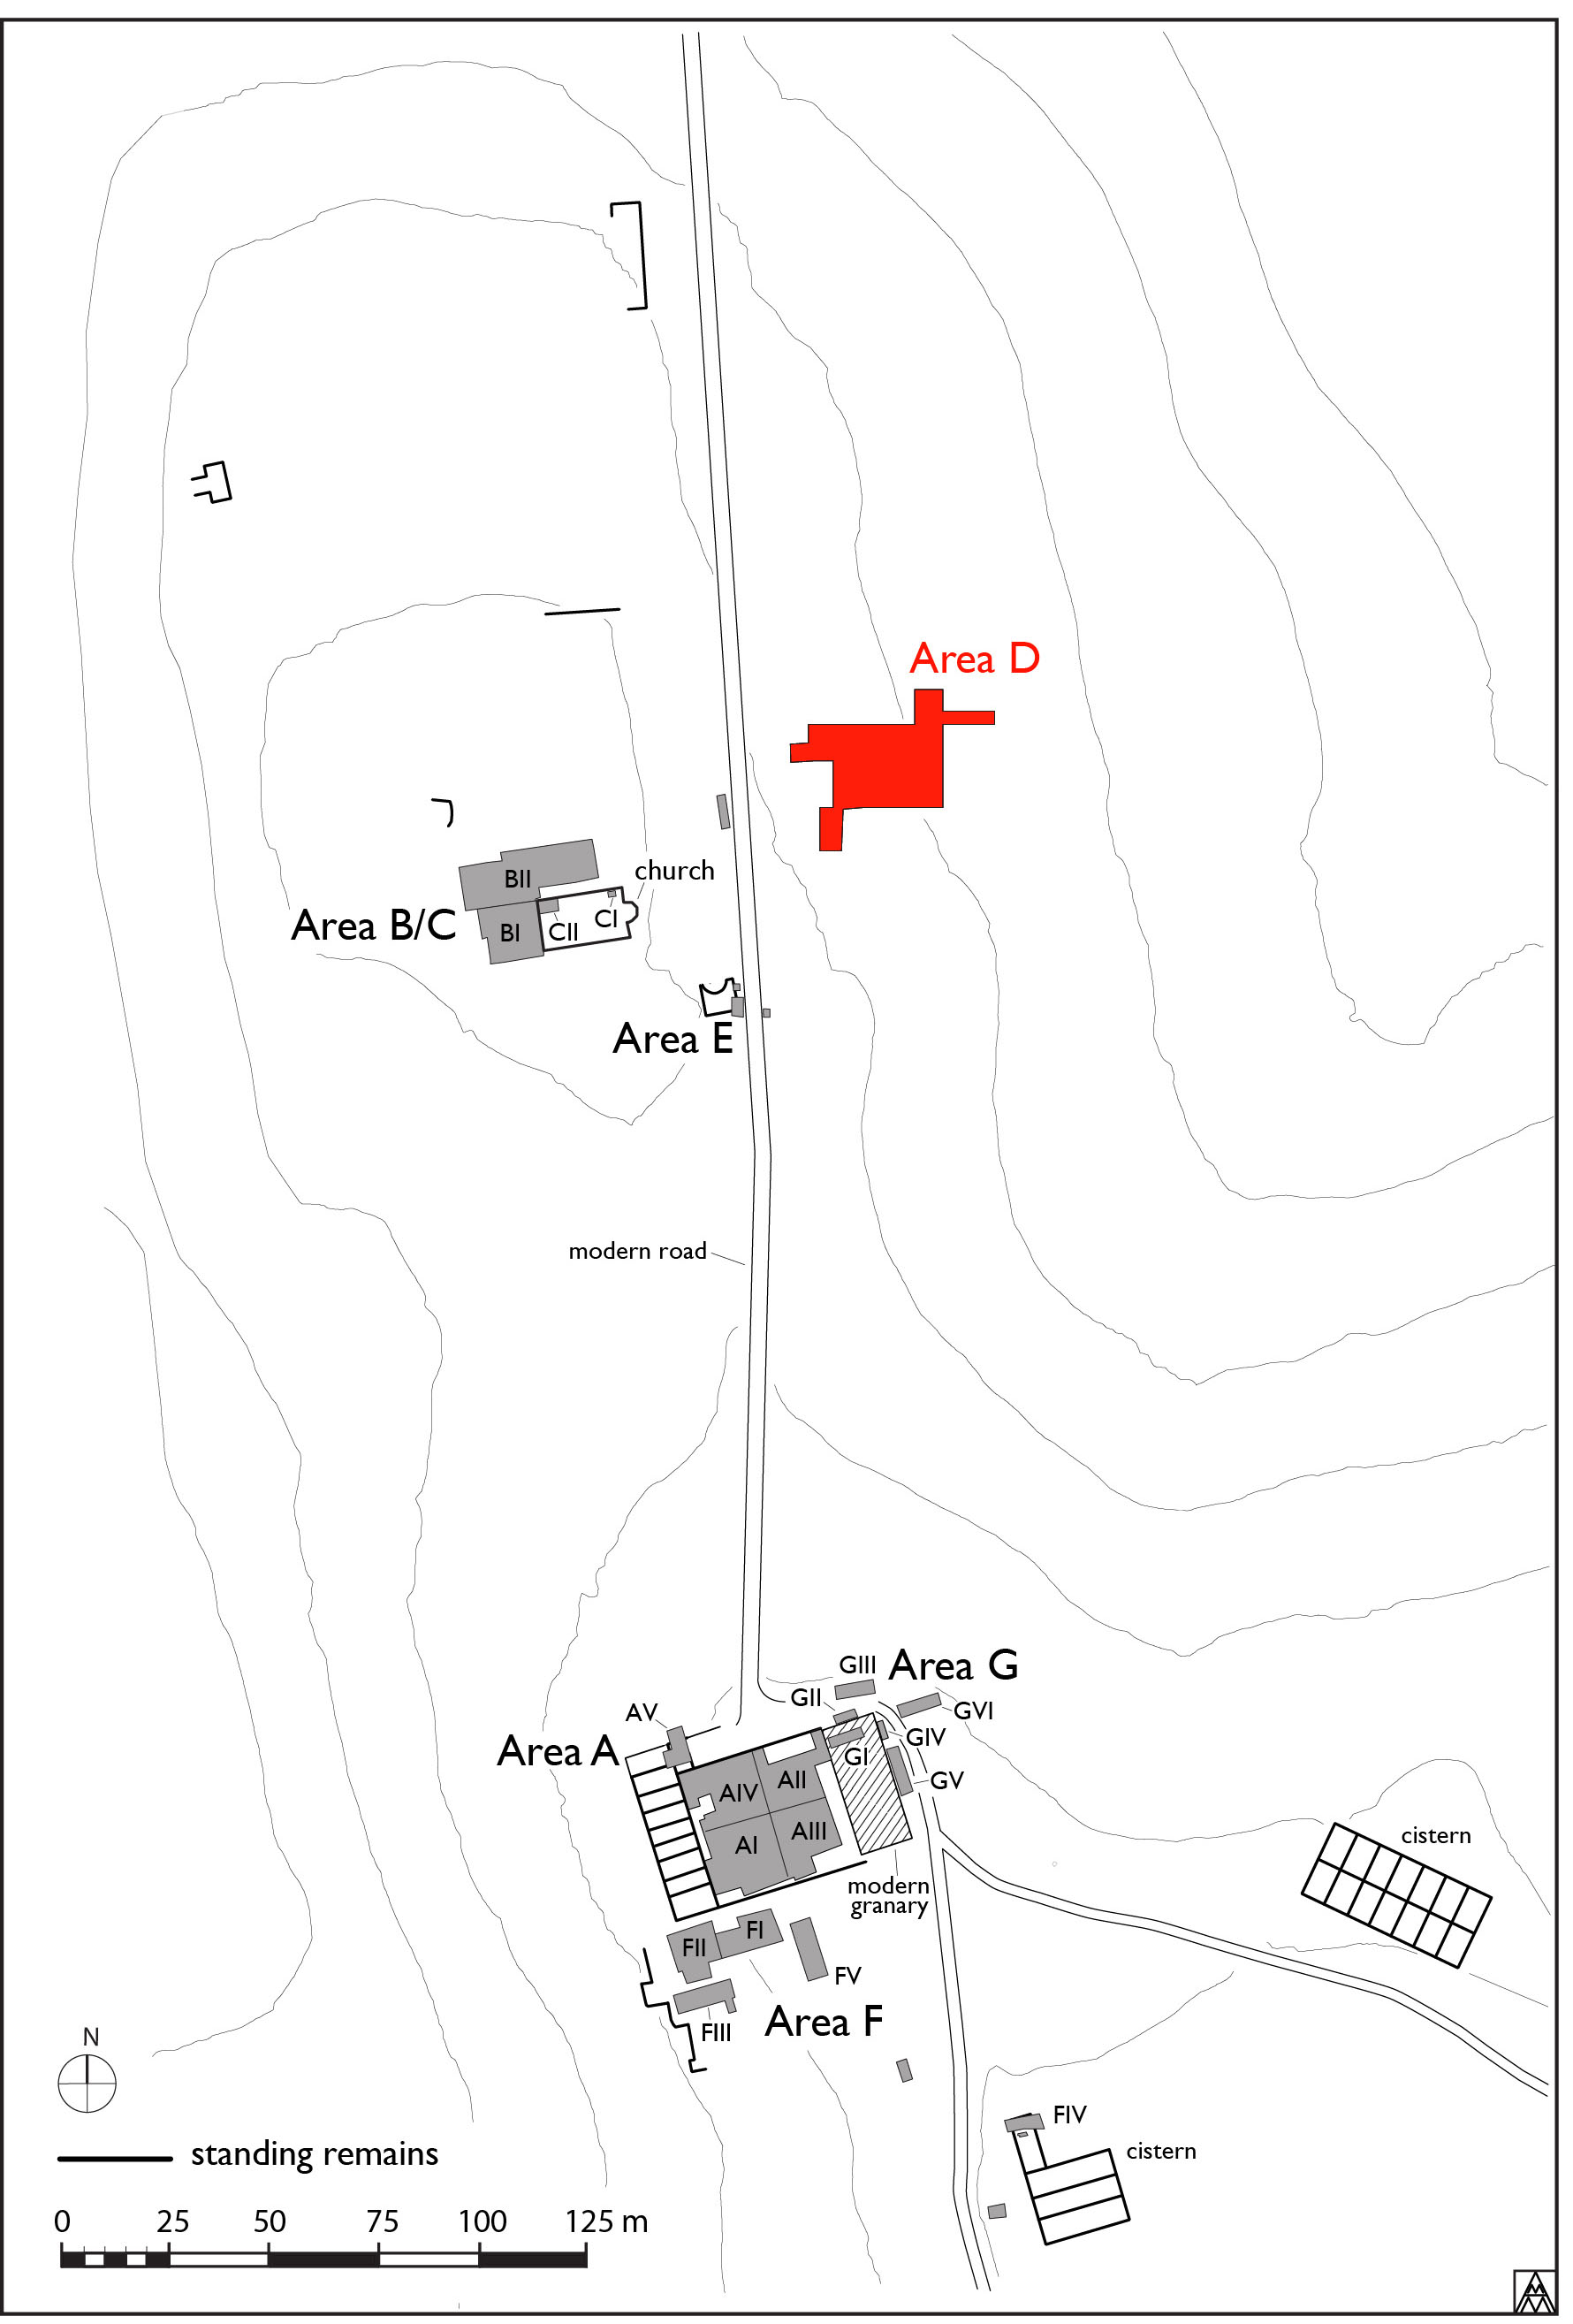 Figure 1. General site plan showing location of Area D (Margaret Andrews).